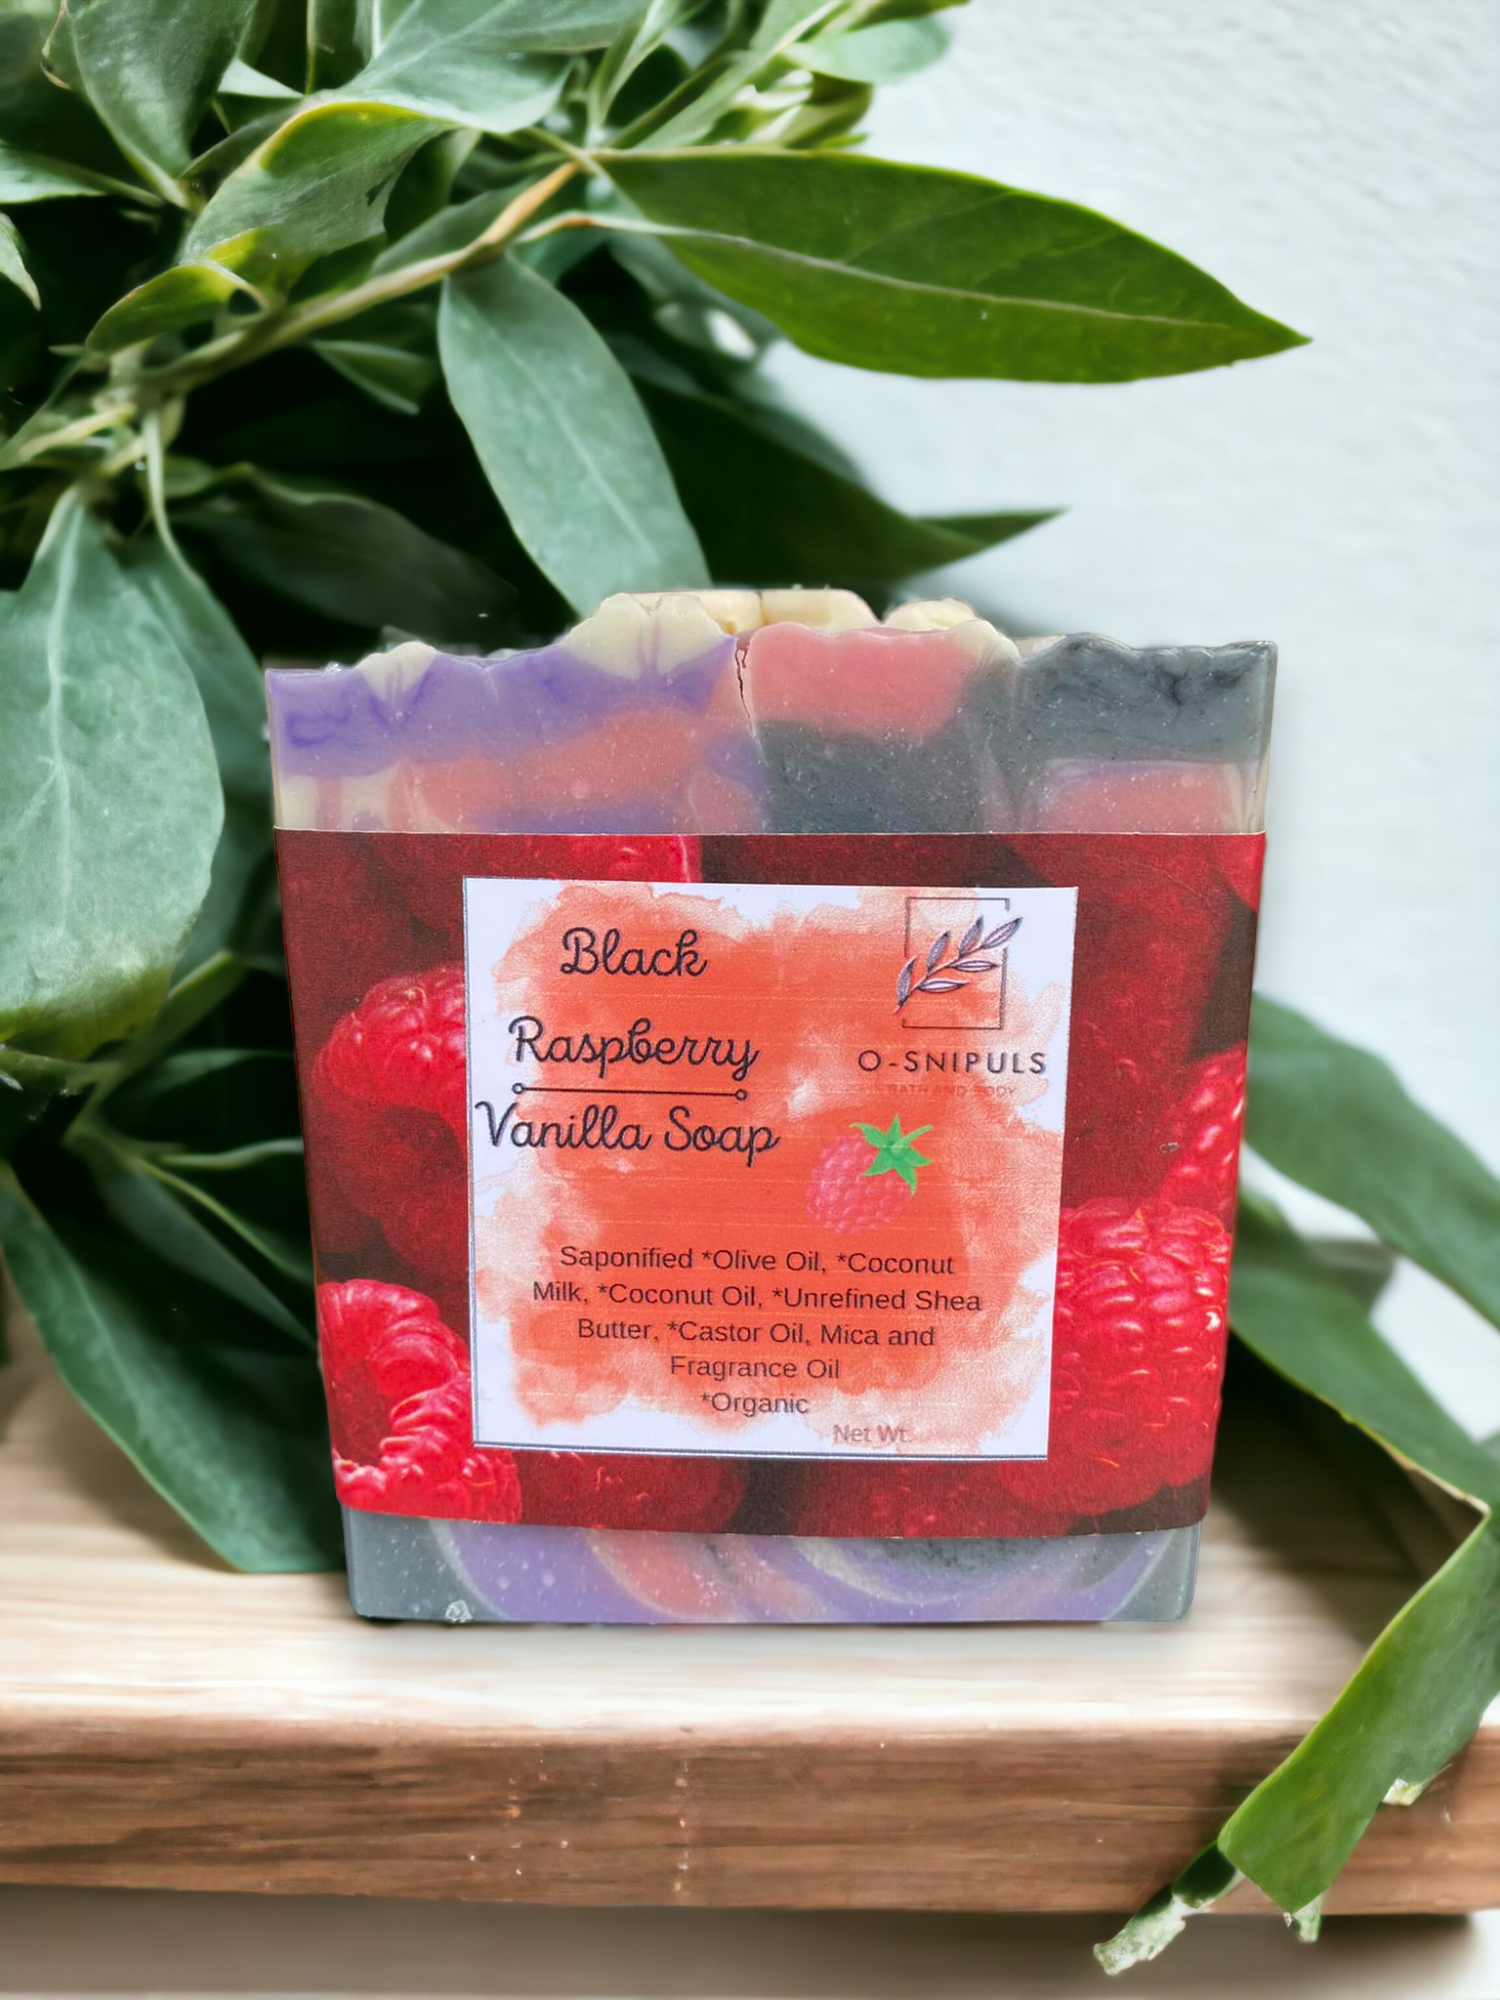 Back Raspberry Vanilla soap